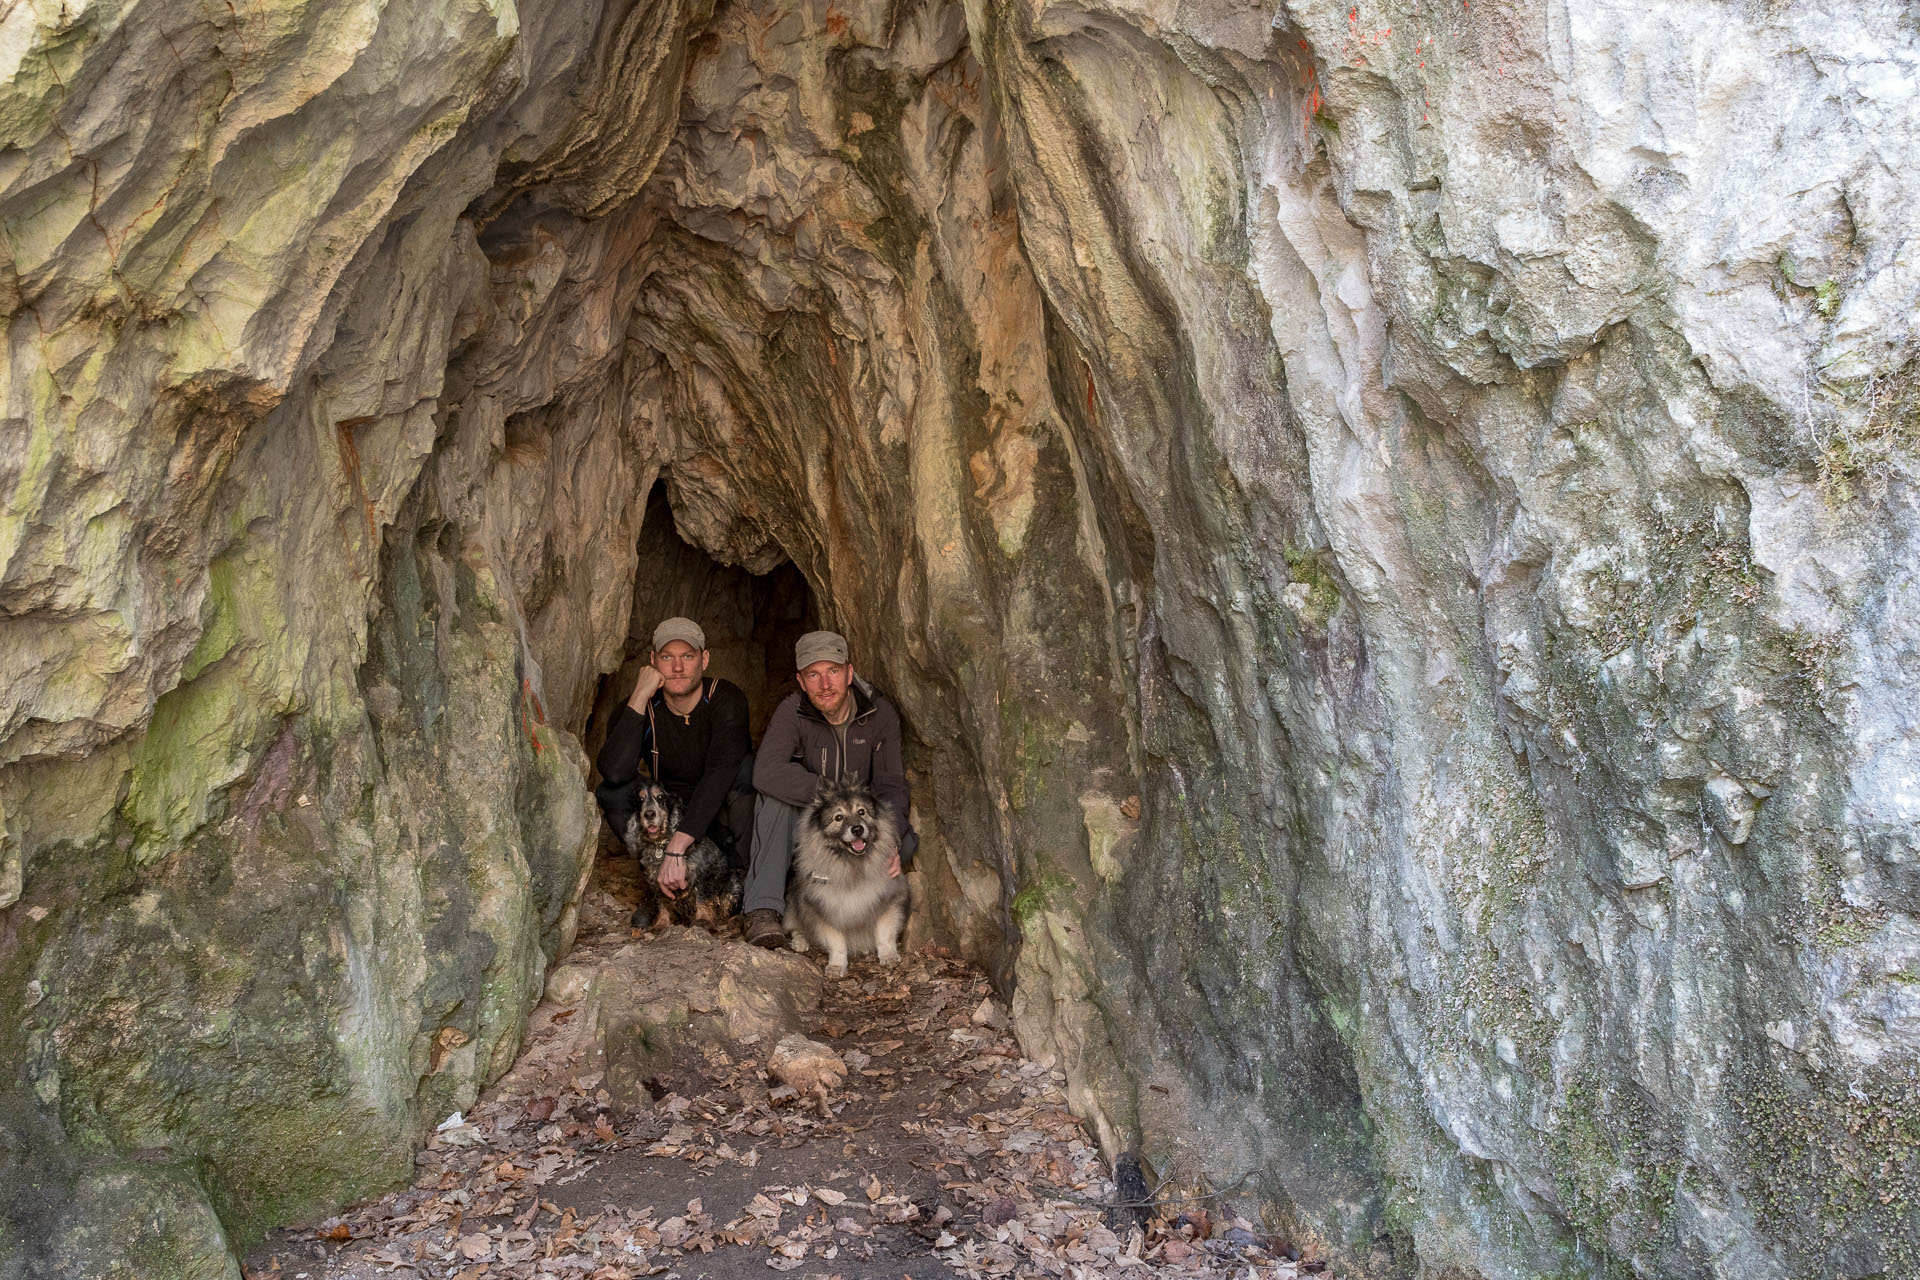 v Hutnianskej jaskyni